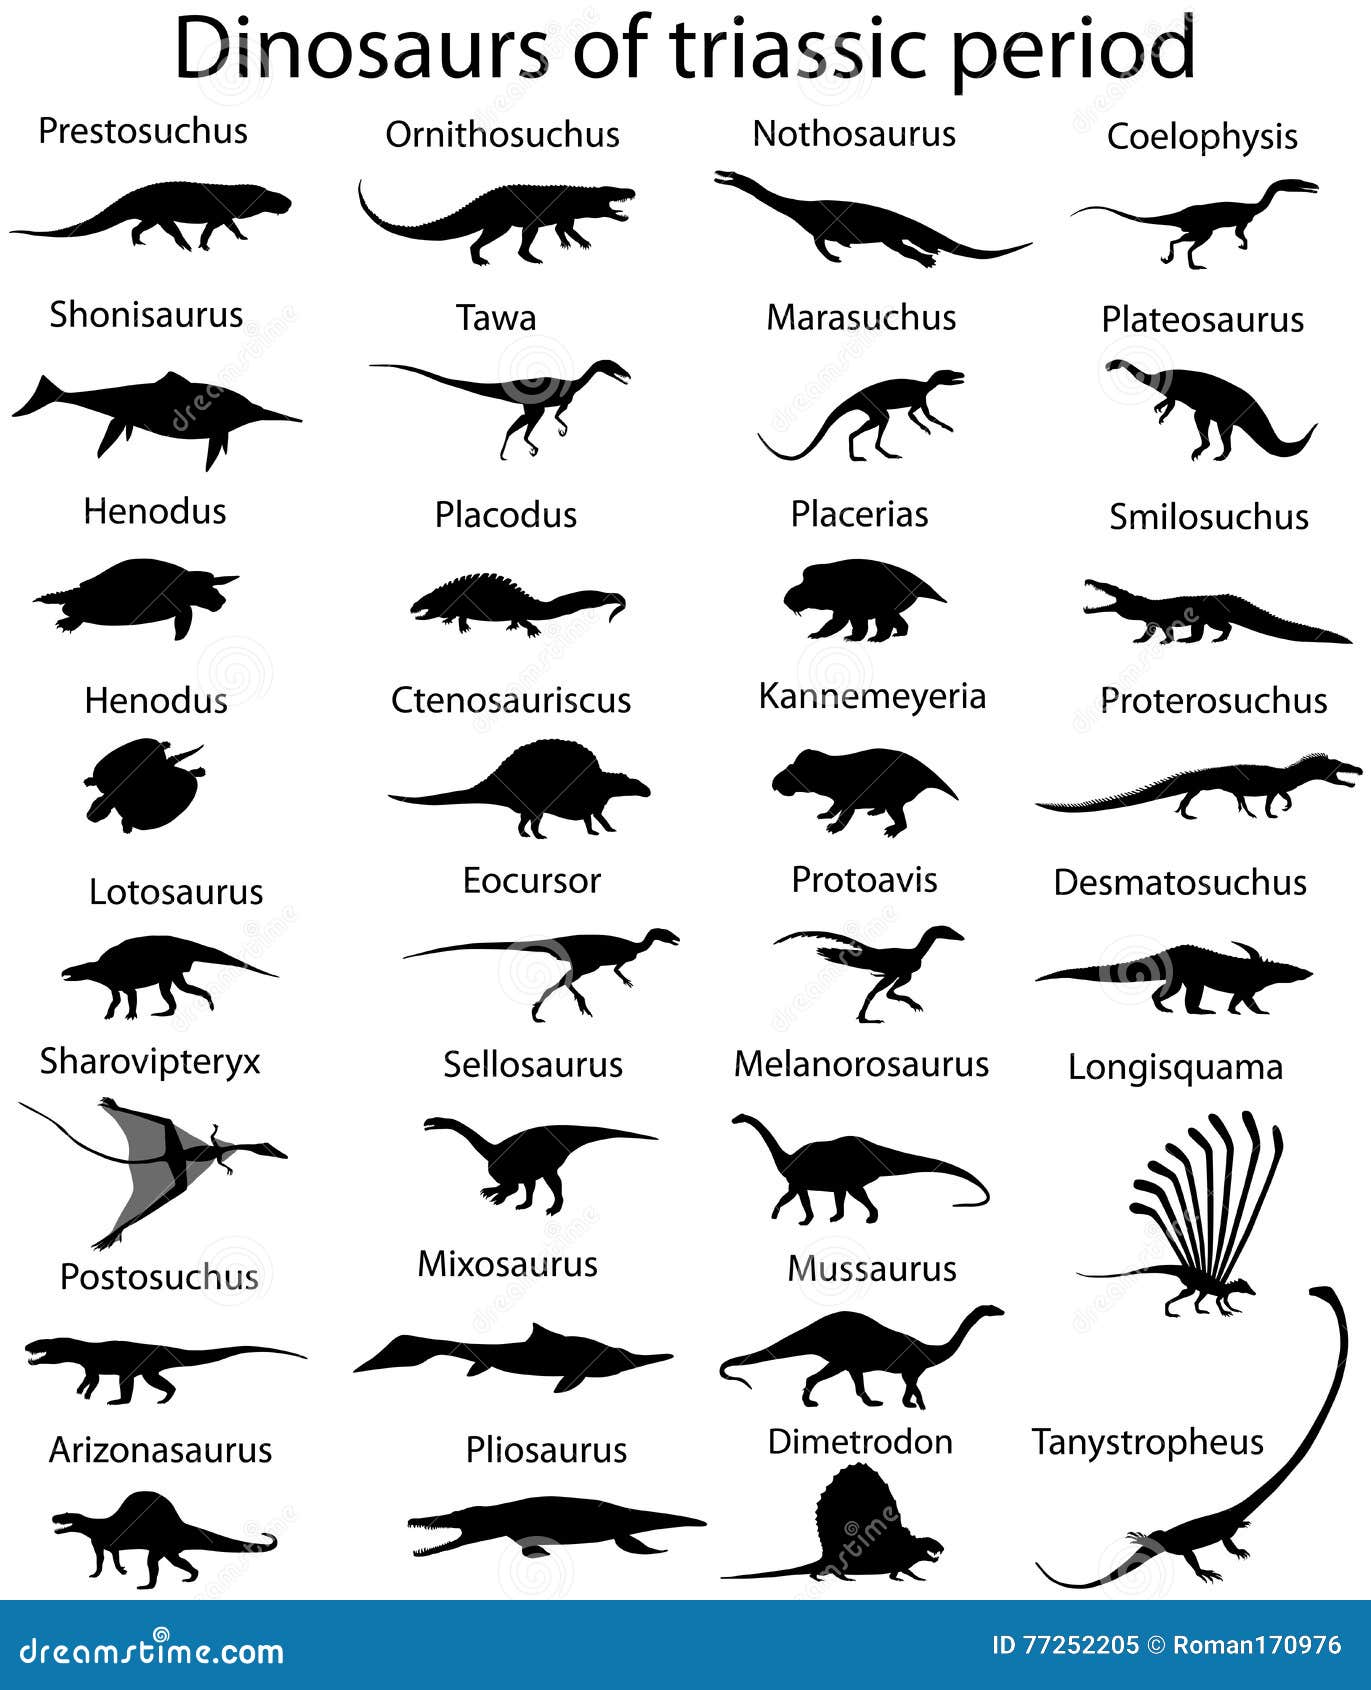 dinosaurs of triassic period